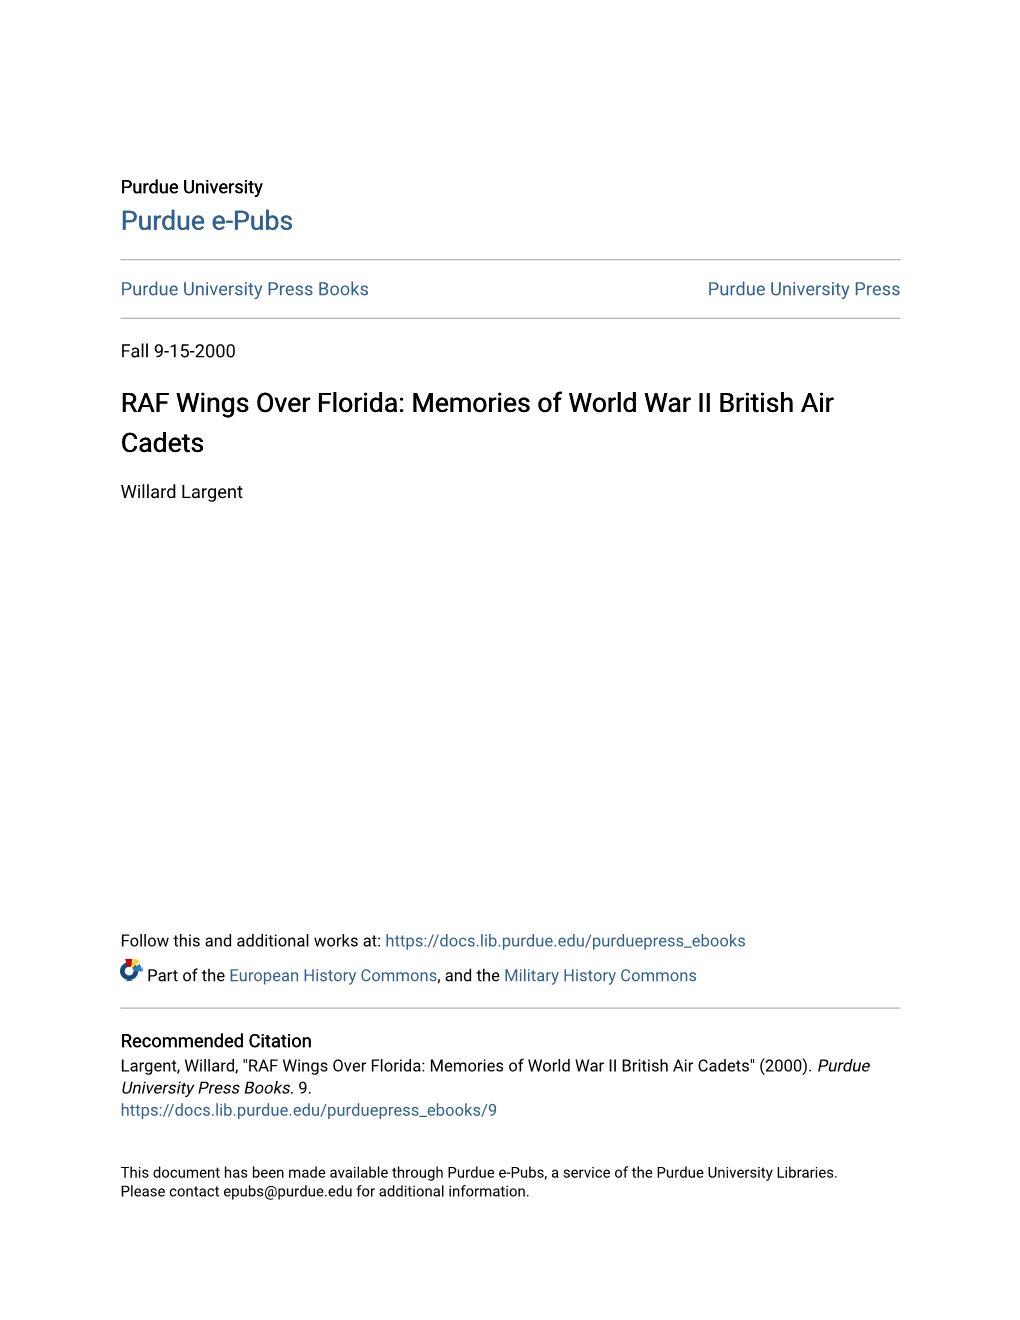 RAF Wings Over Florida: Memories of World War II British Air Cadets